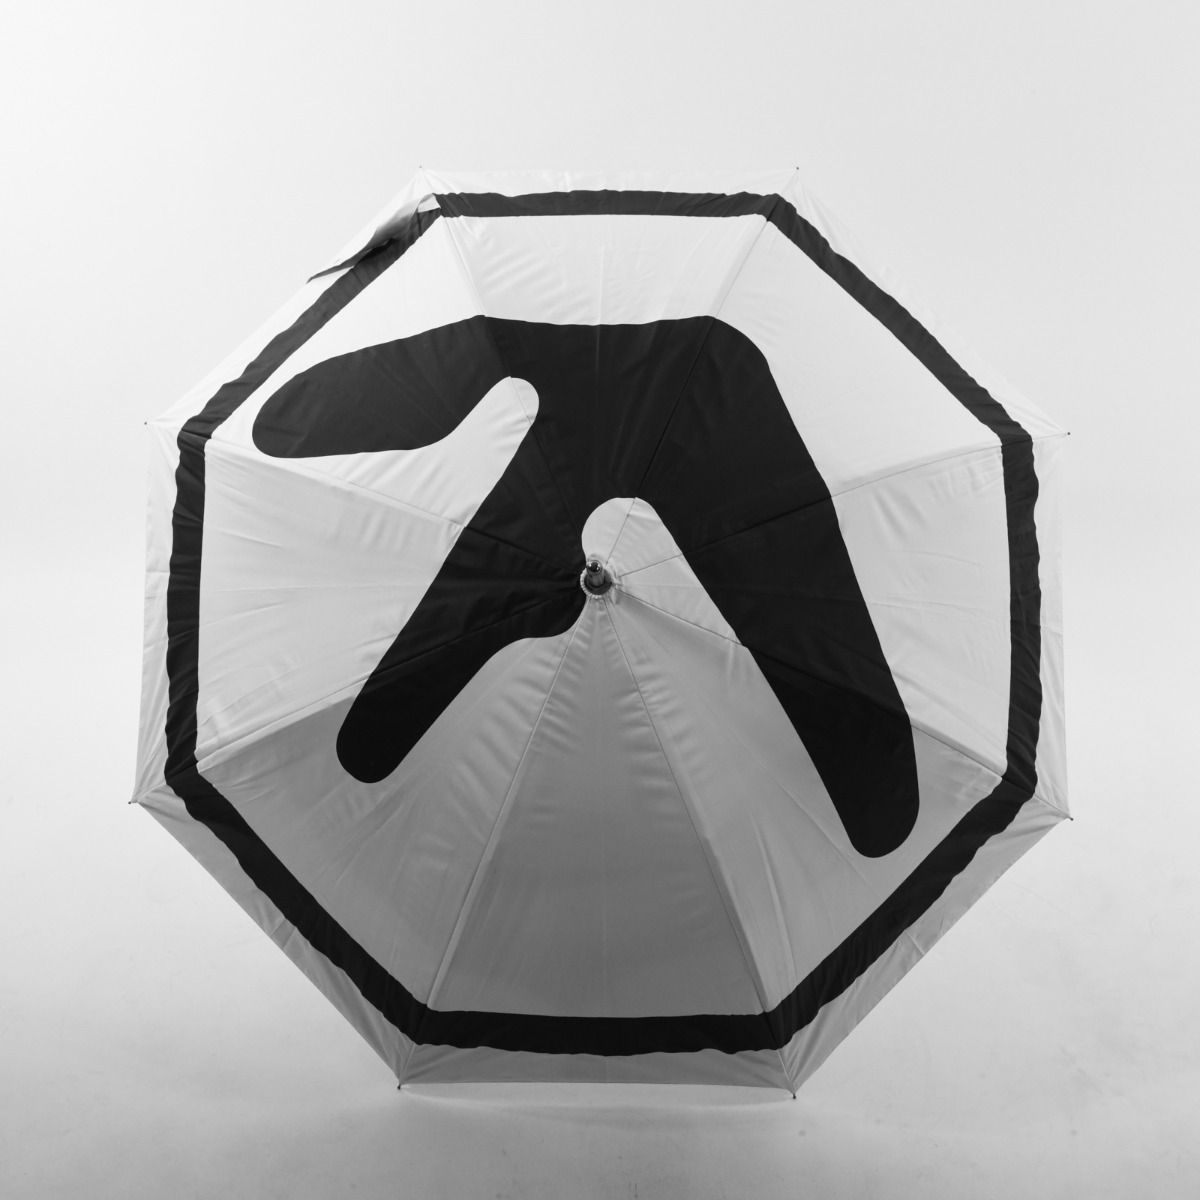 Aphex Twin 2018 Umbrella